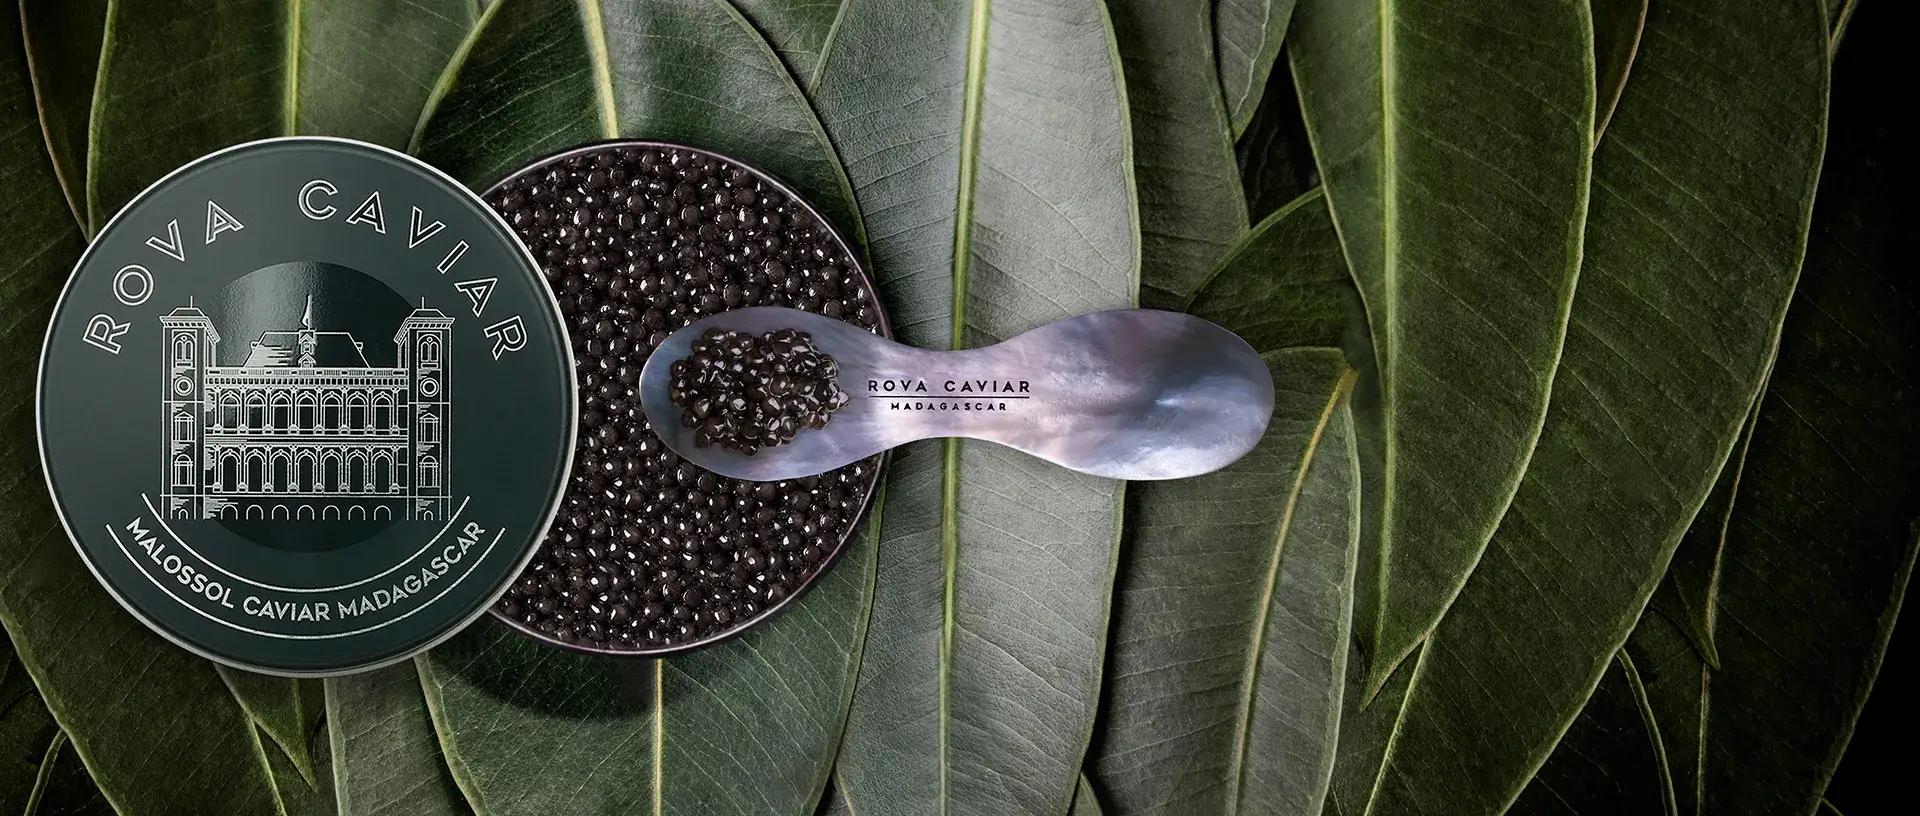 Baeri Imperial - Rova Caviar Madagascar